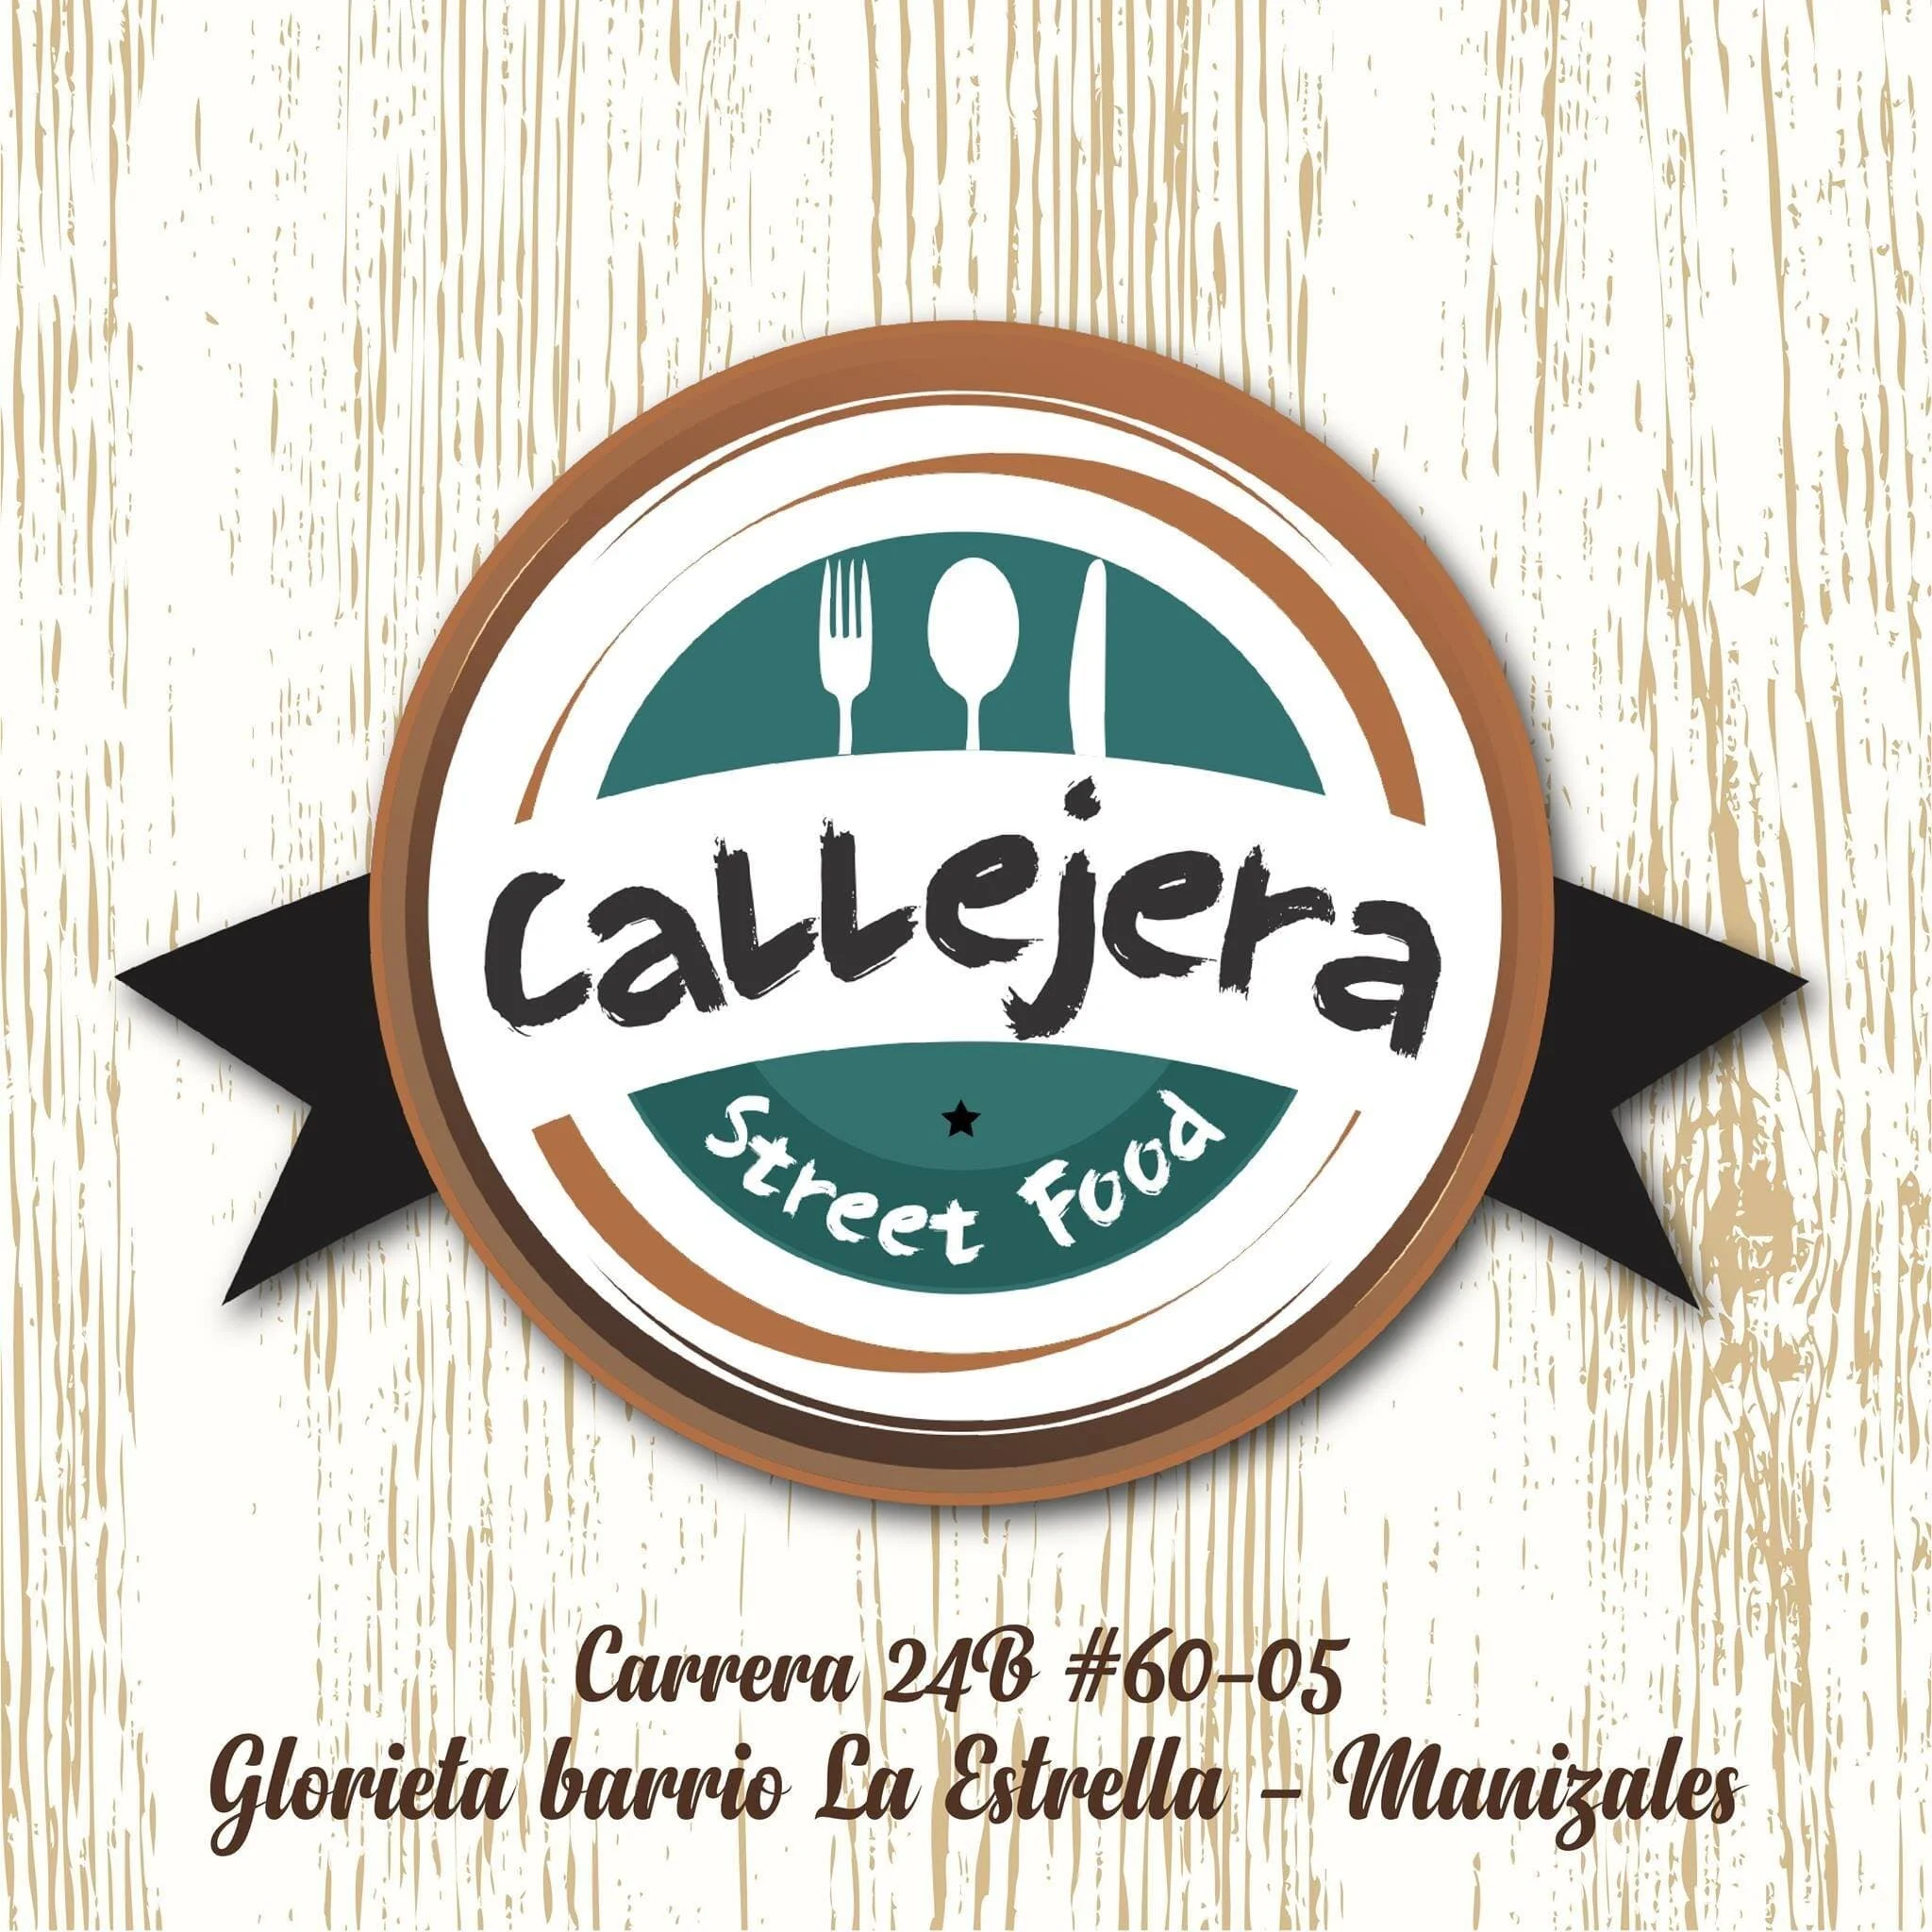 Restaurante-callejera-street-food-21882